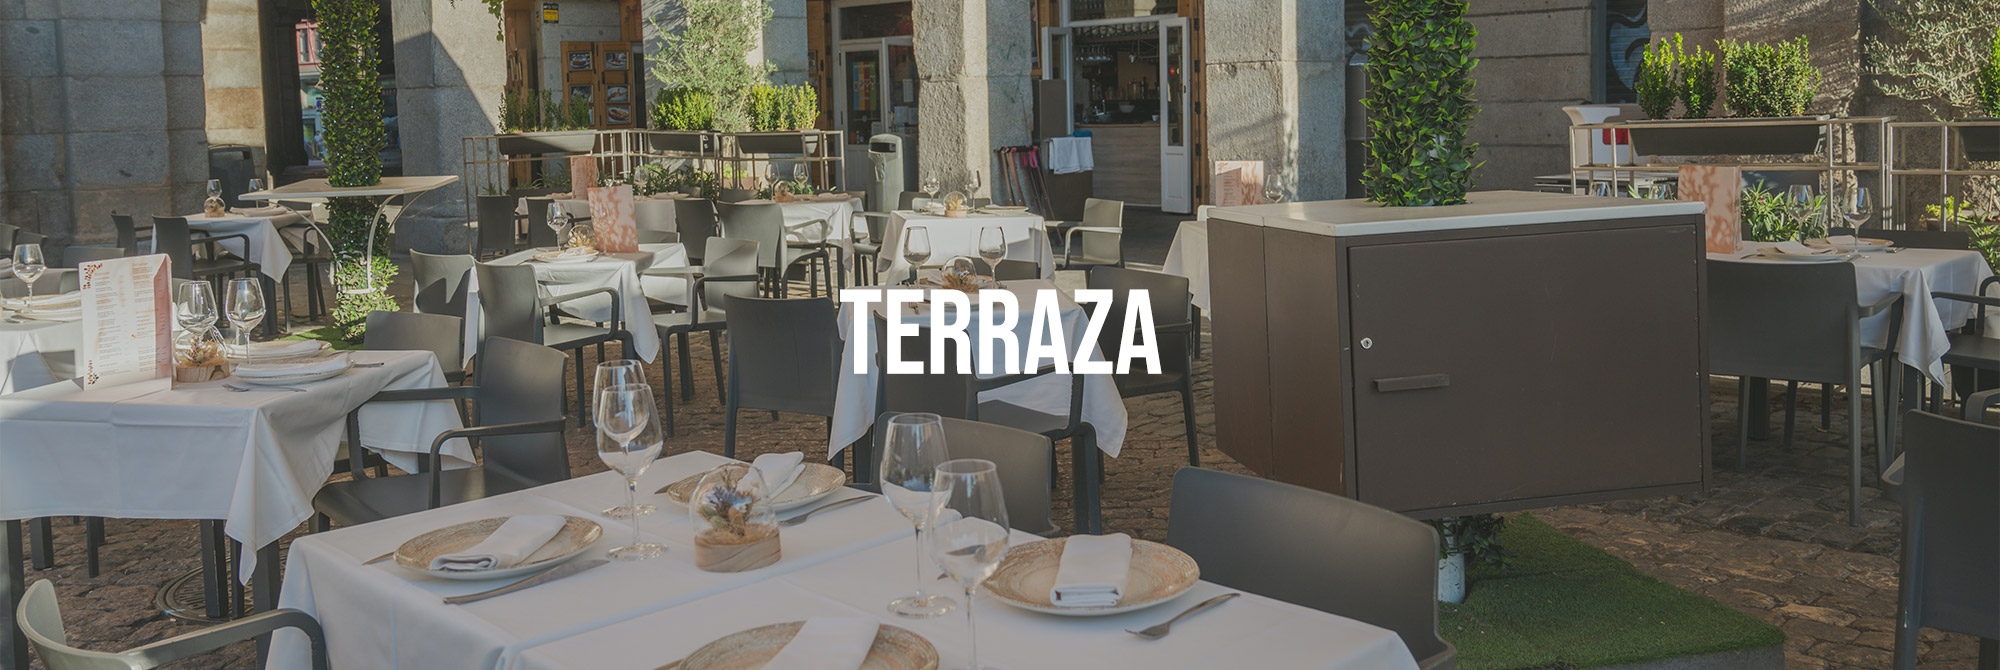 restaurantes con terraza madrid